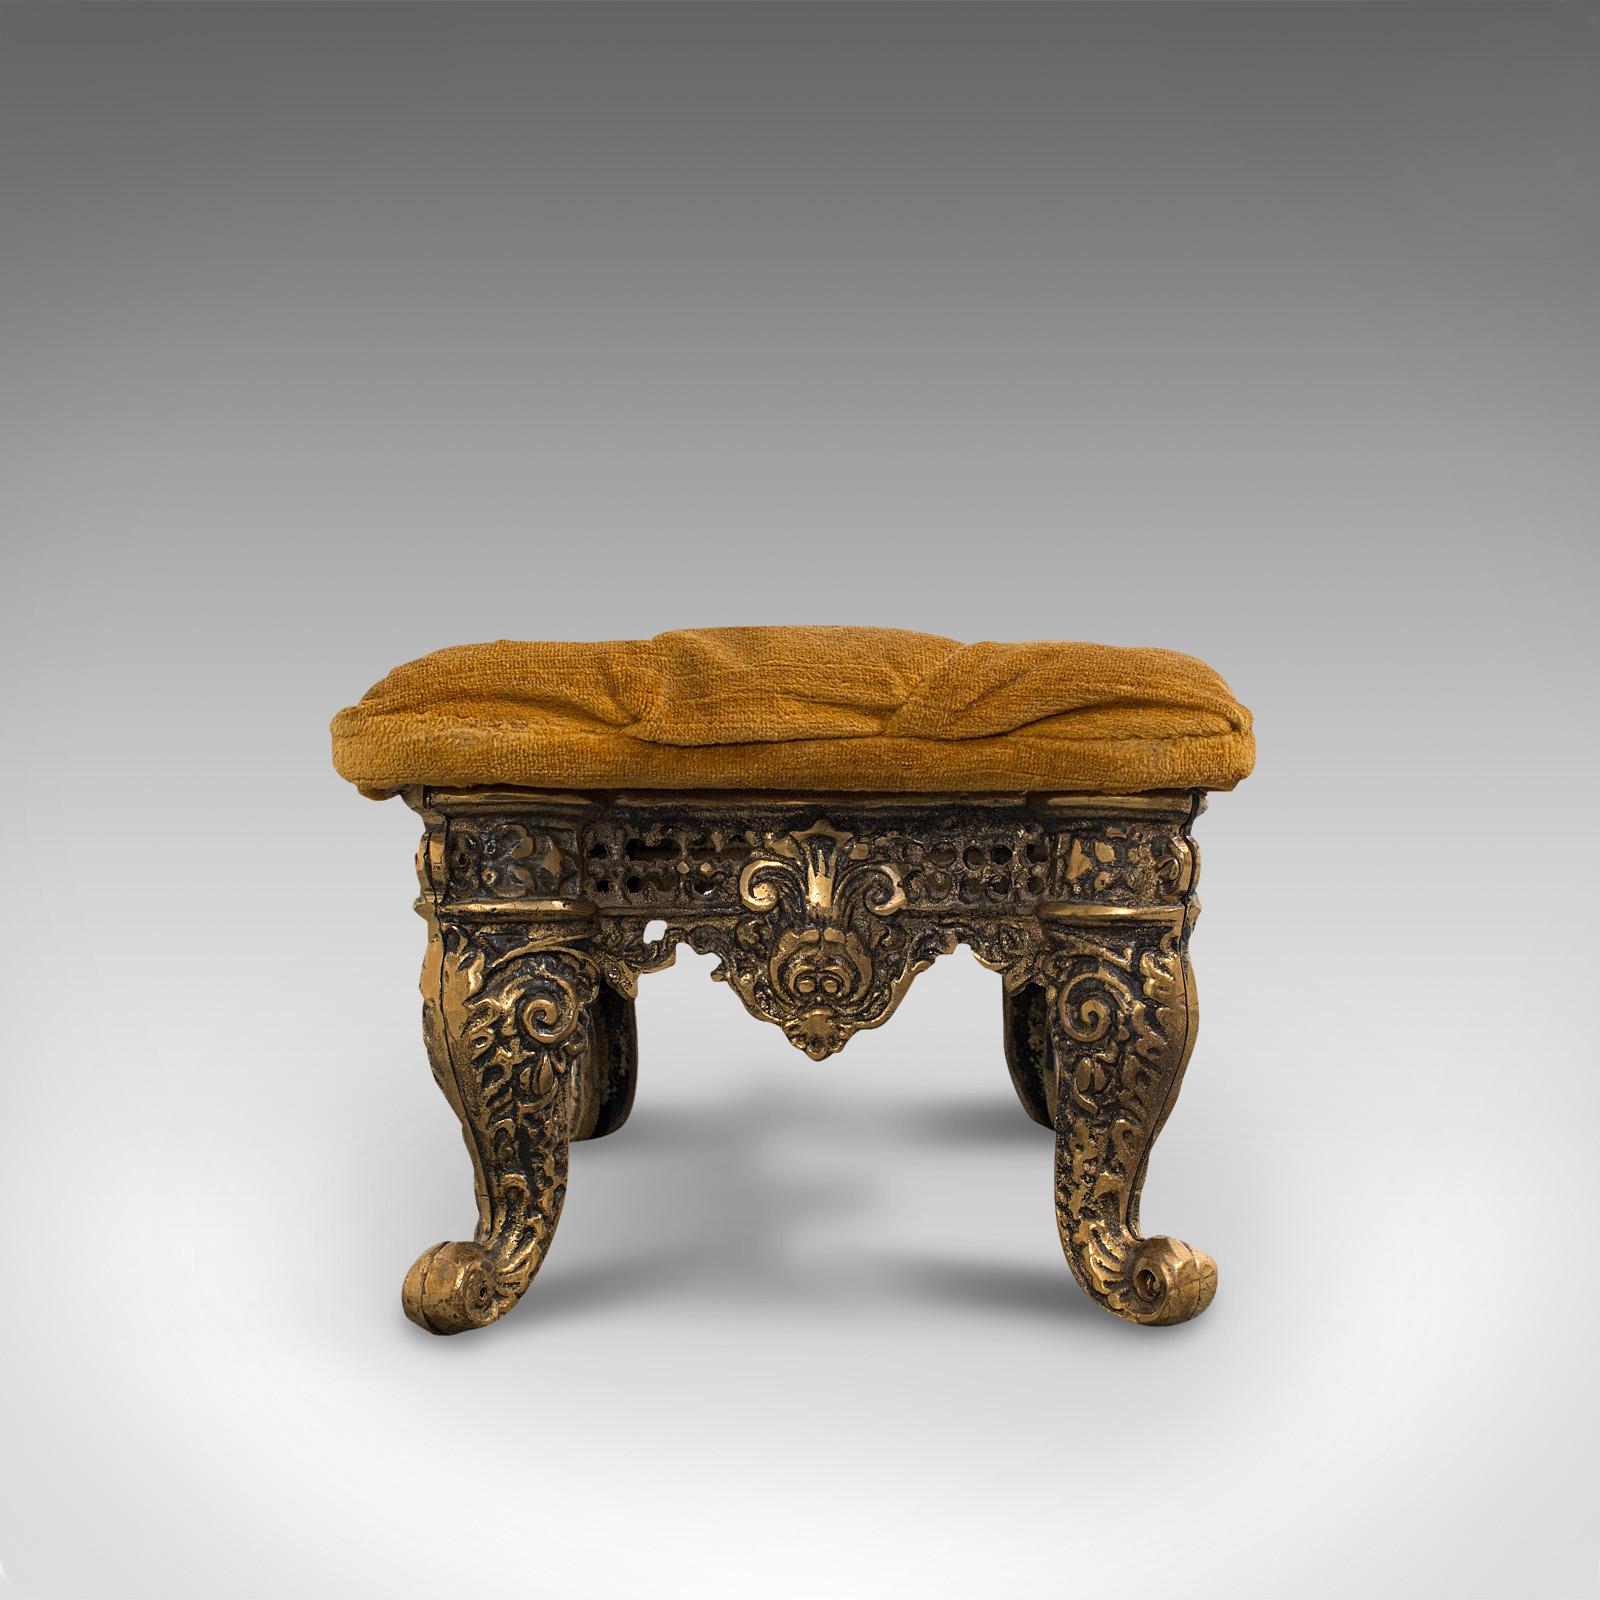 Metal Antique Decorative Footstool, Italian, Gilt, Stool, Baroque Revival, circa 1900